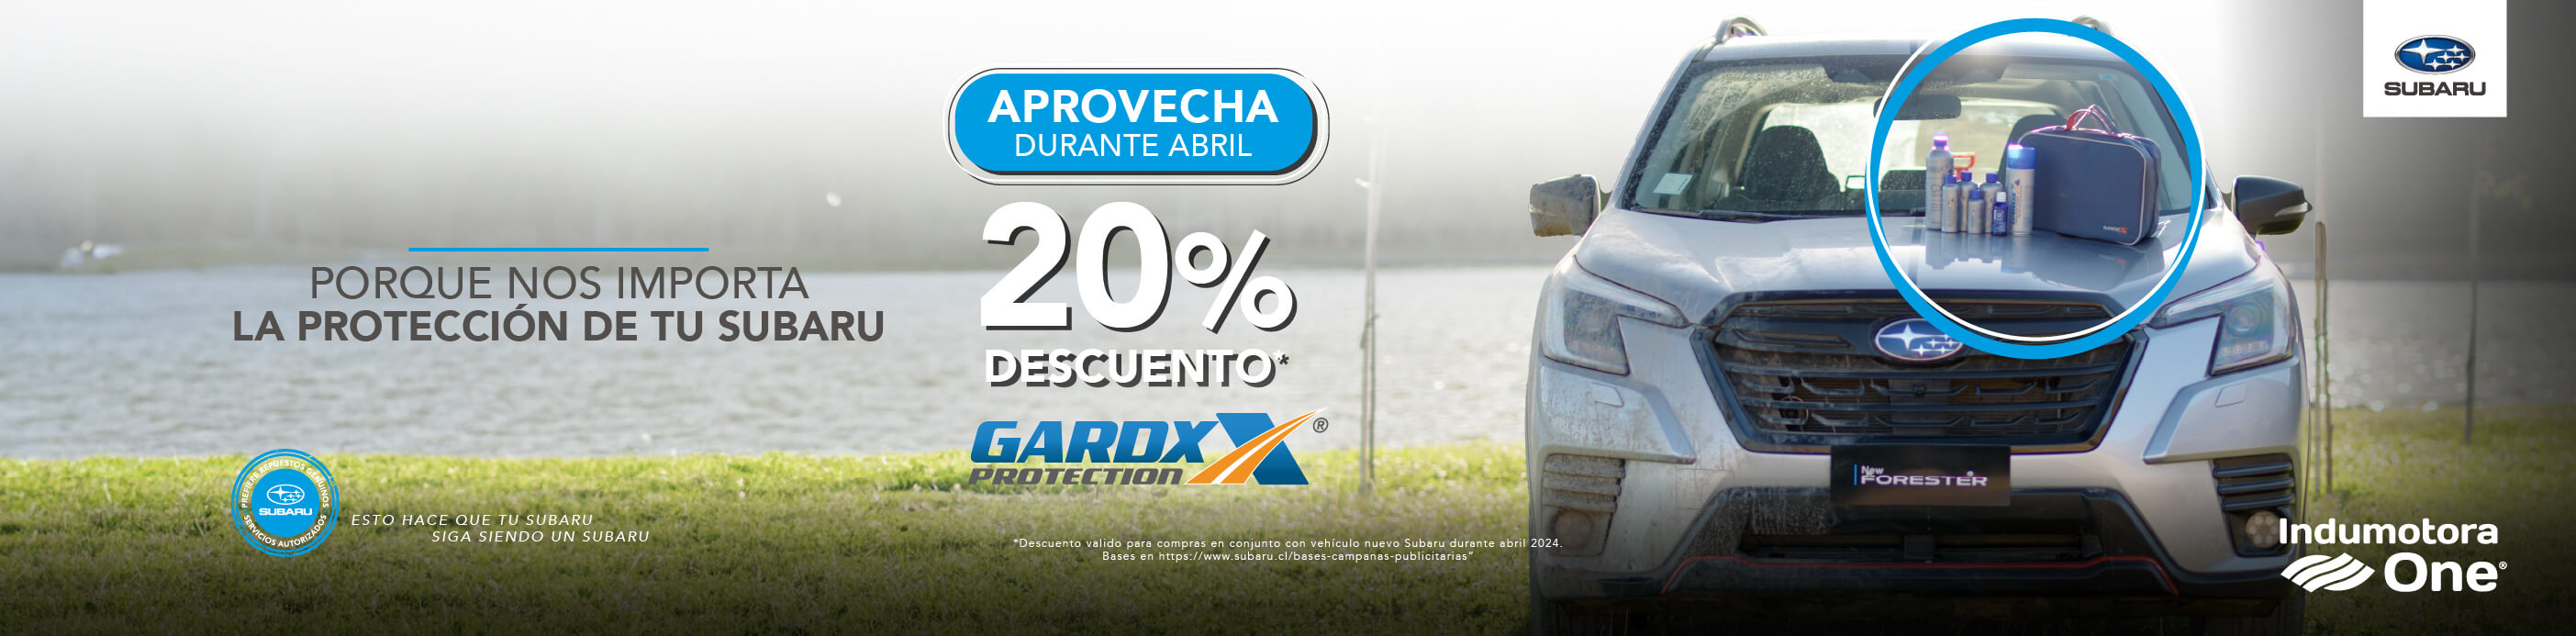 Promo Subaru Gardx